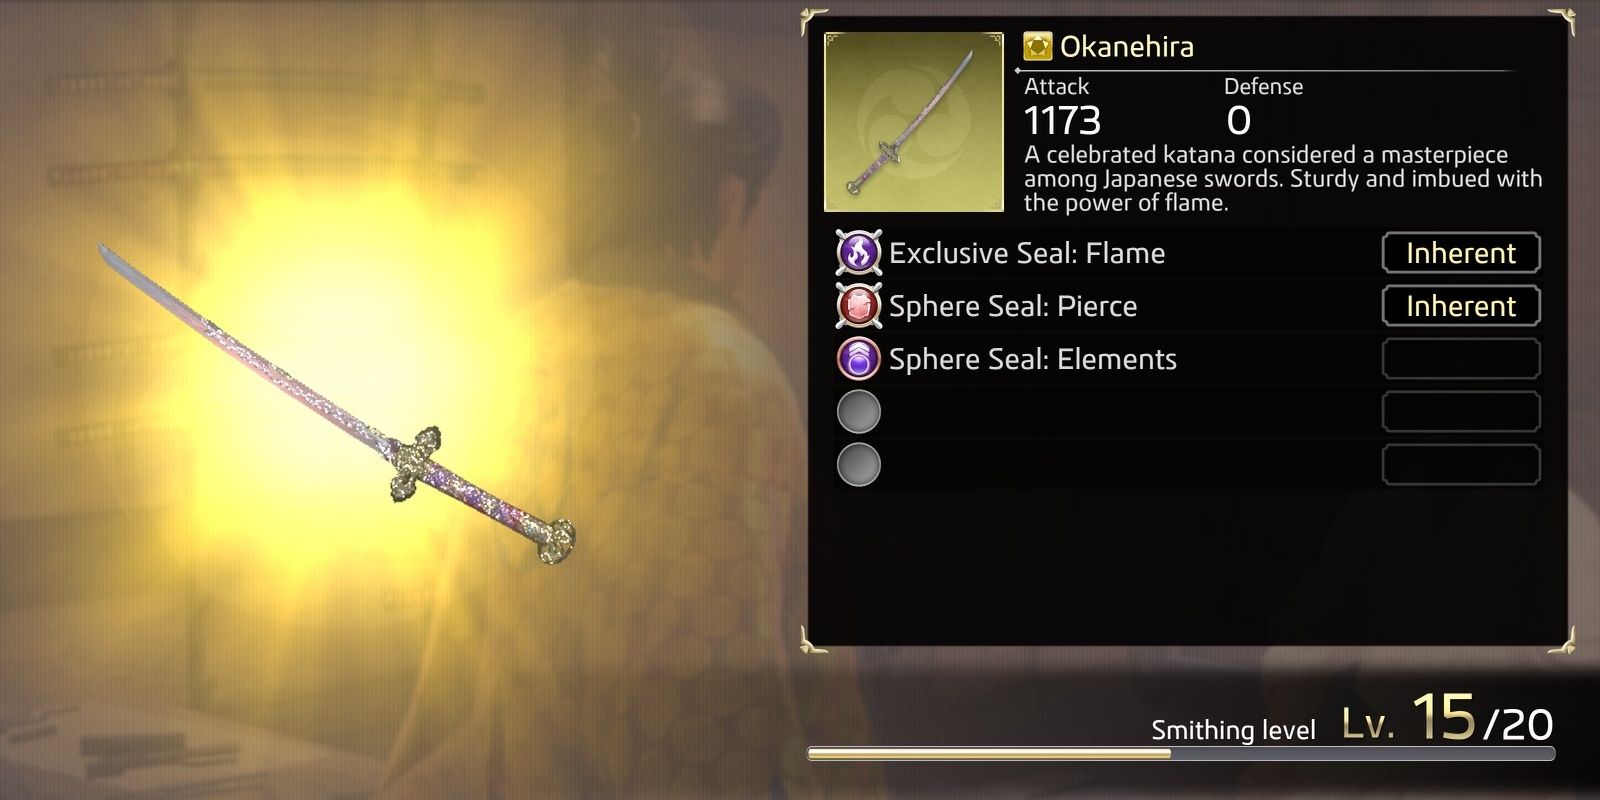 Like A Dragon: Okanehira sword equipped with Pierce Seal equipped in Ishin!